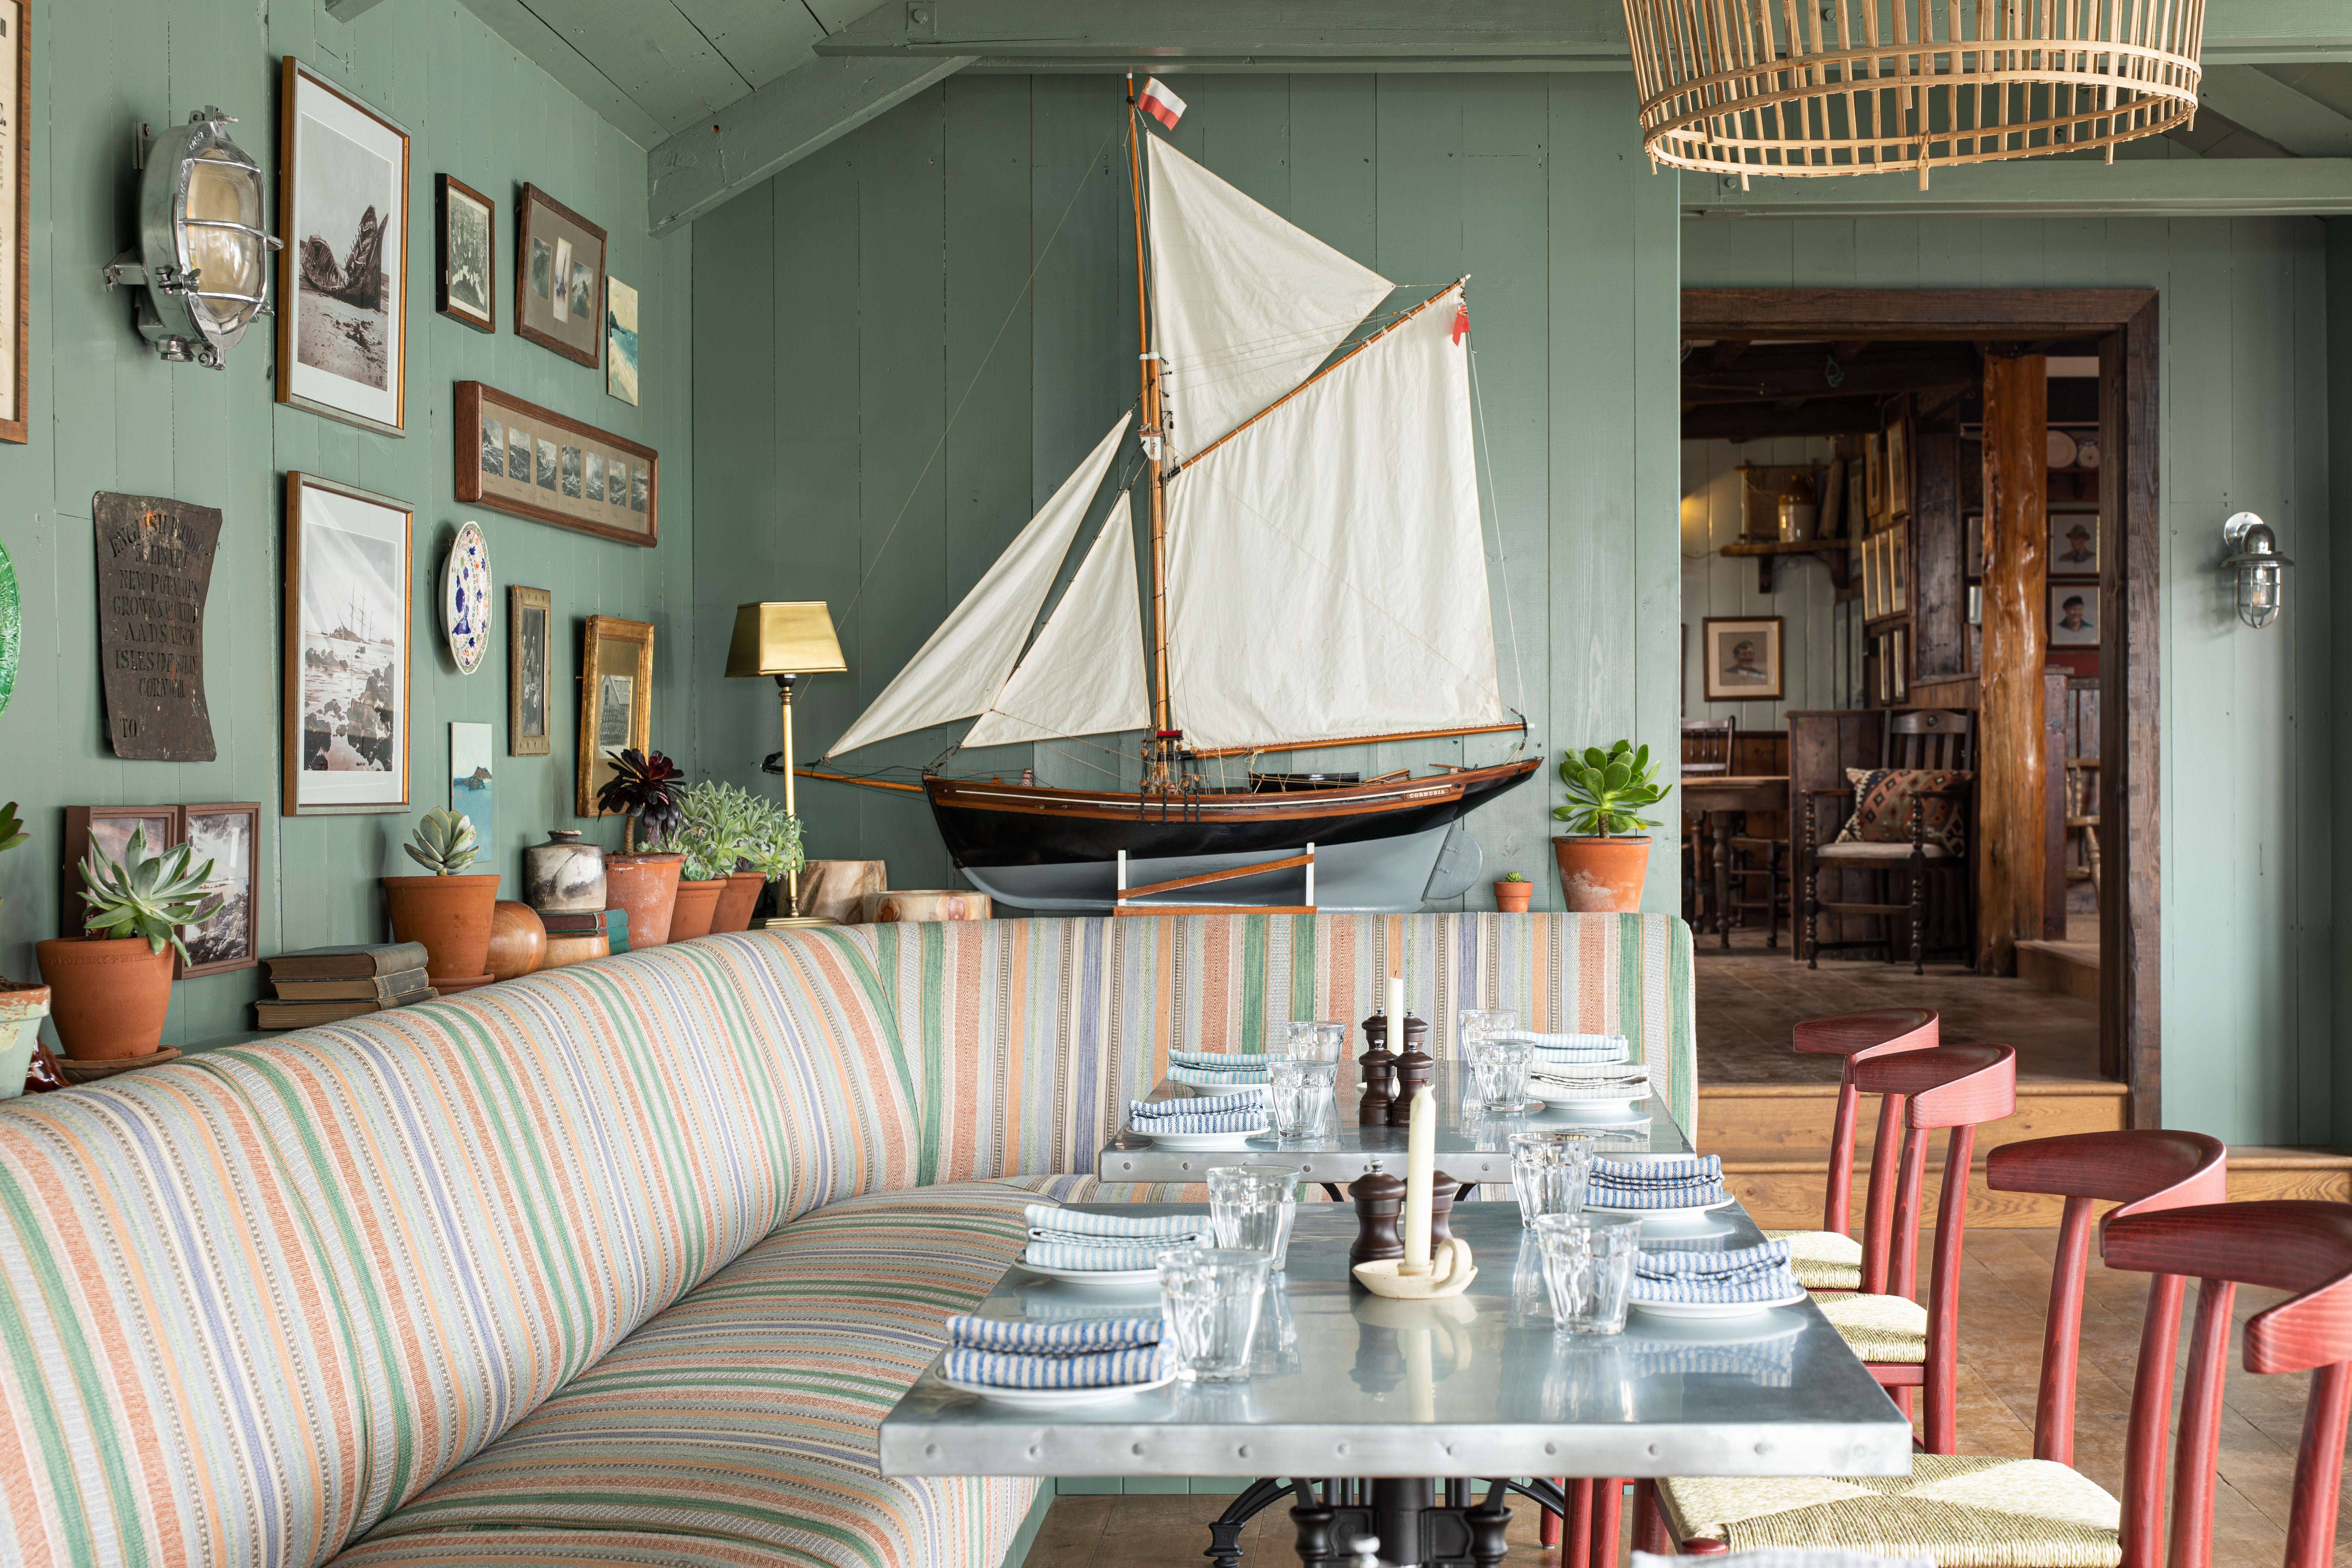 The New Inn embraces nautical decors